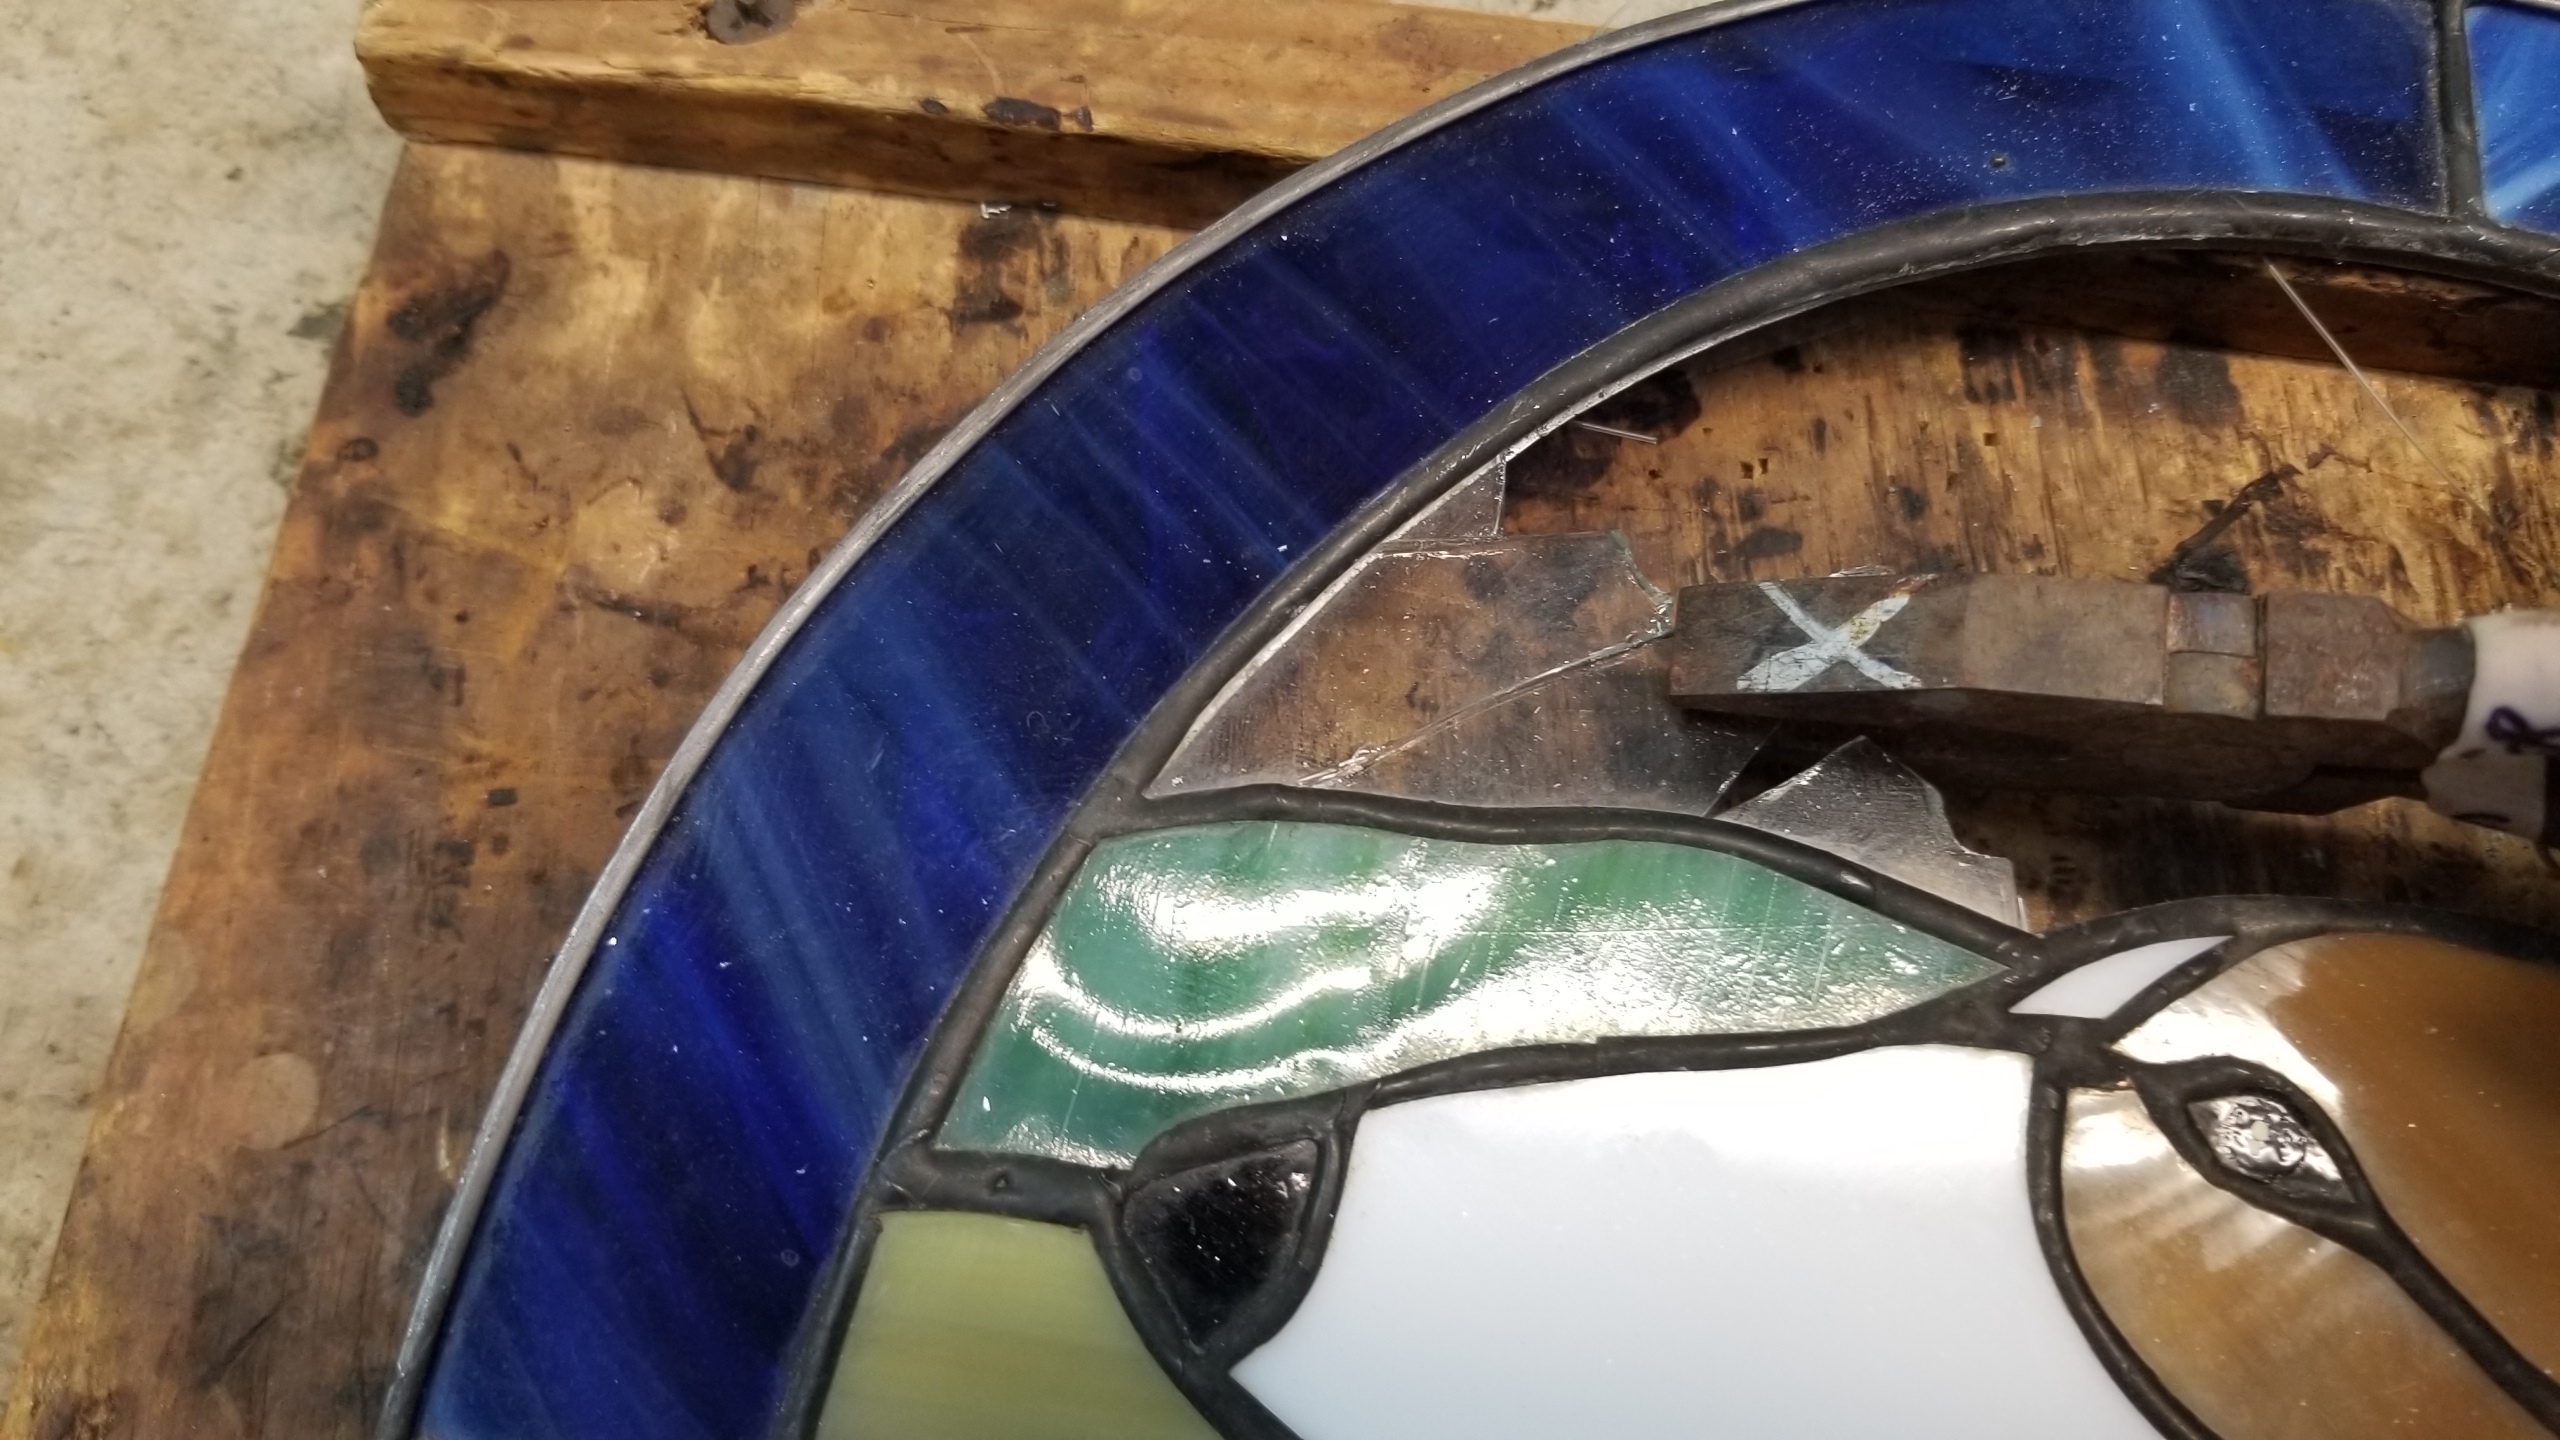 How to Repair a Broken Copper Foil Panel - Living Sun Glass